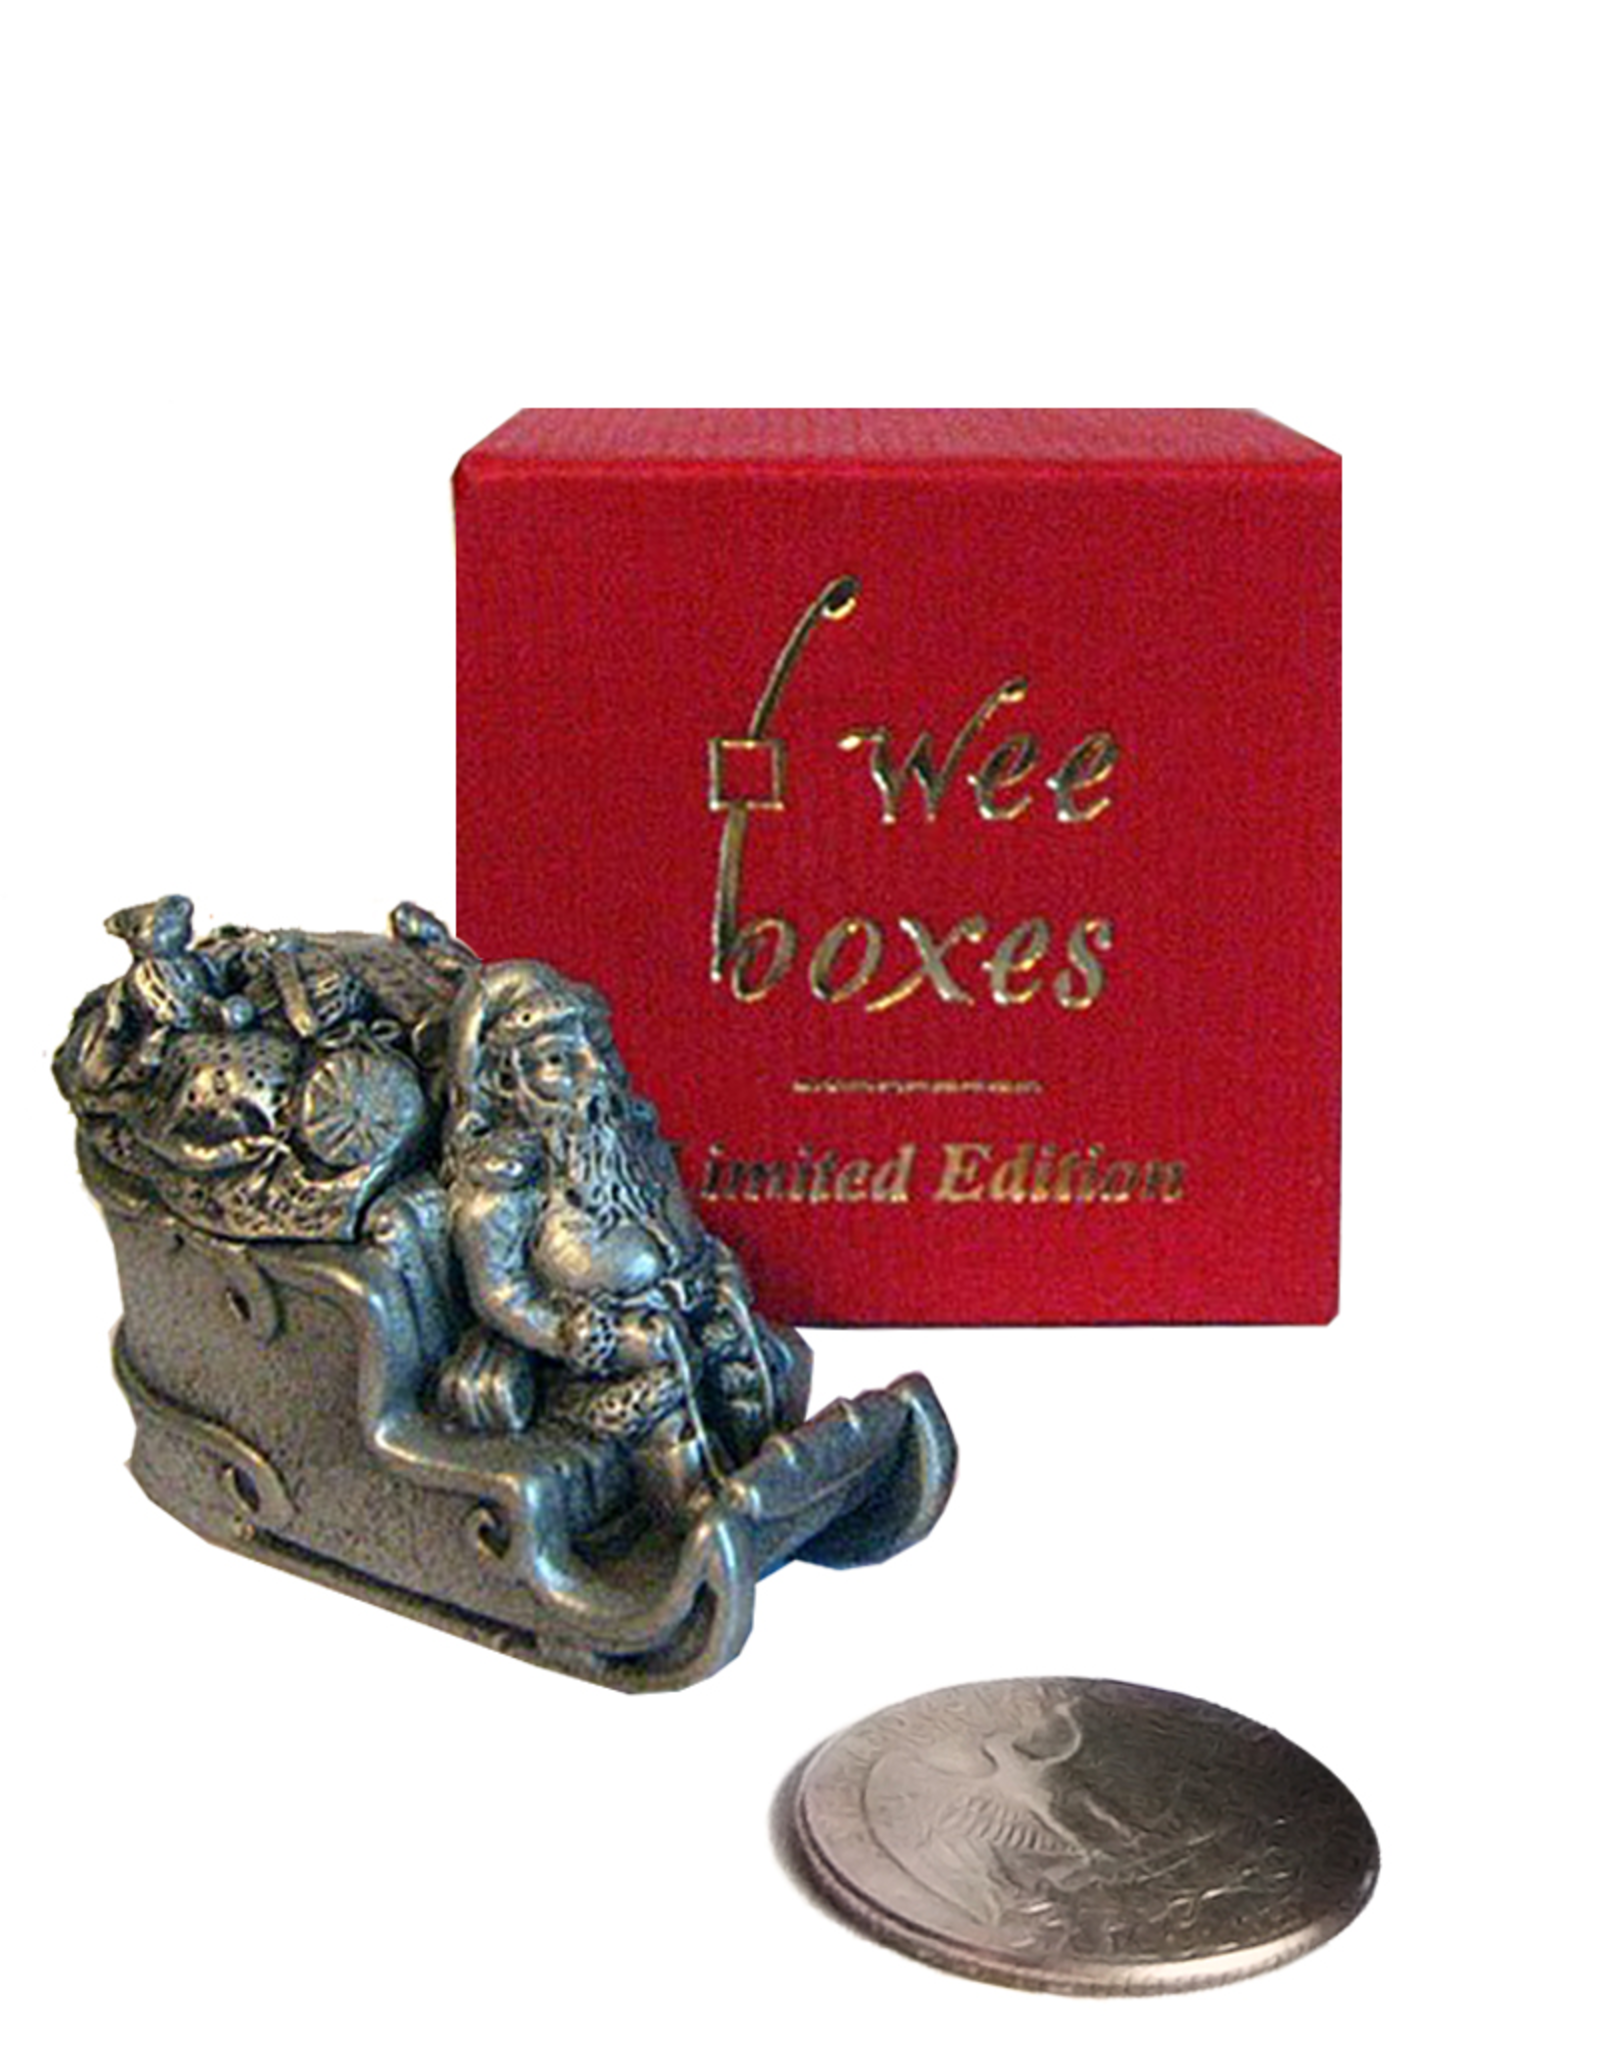 Wee Boxes Santa w Sleigh Pewter Trinket Box Limited Edition w COA